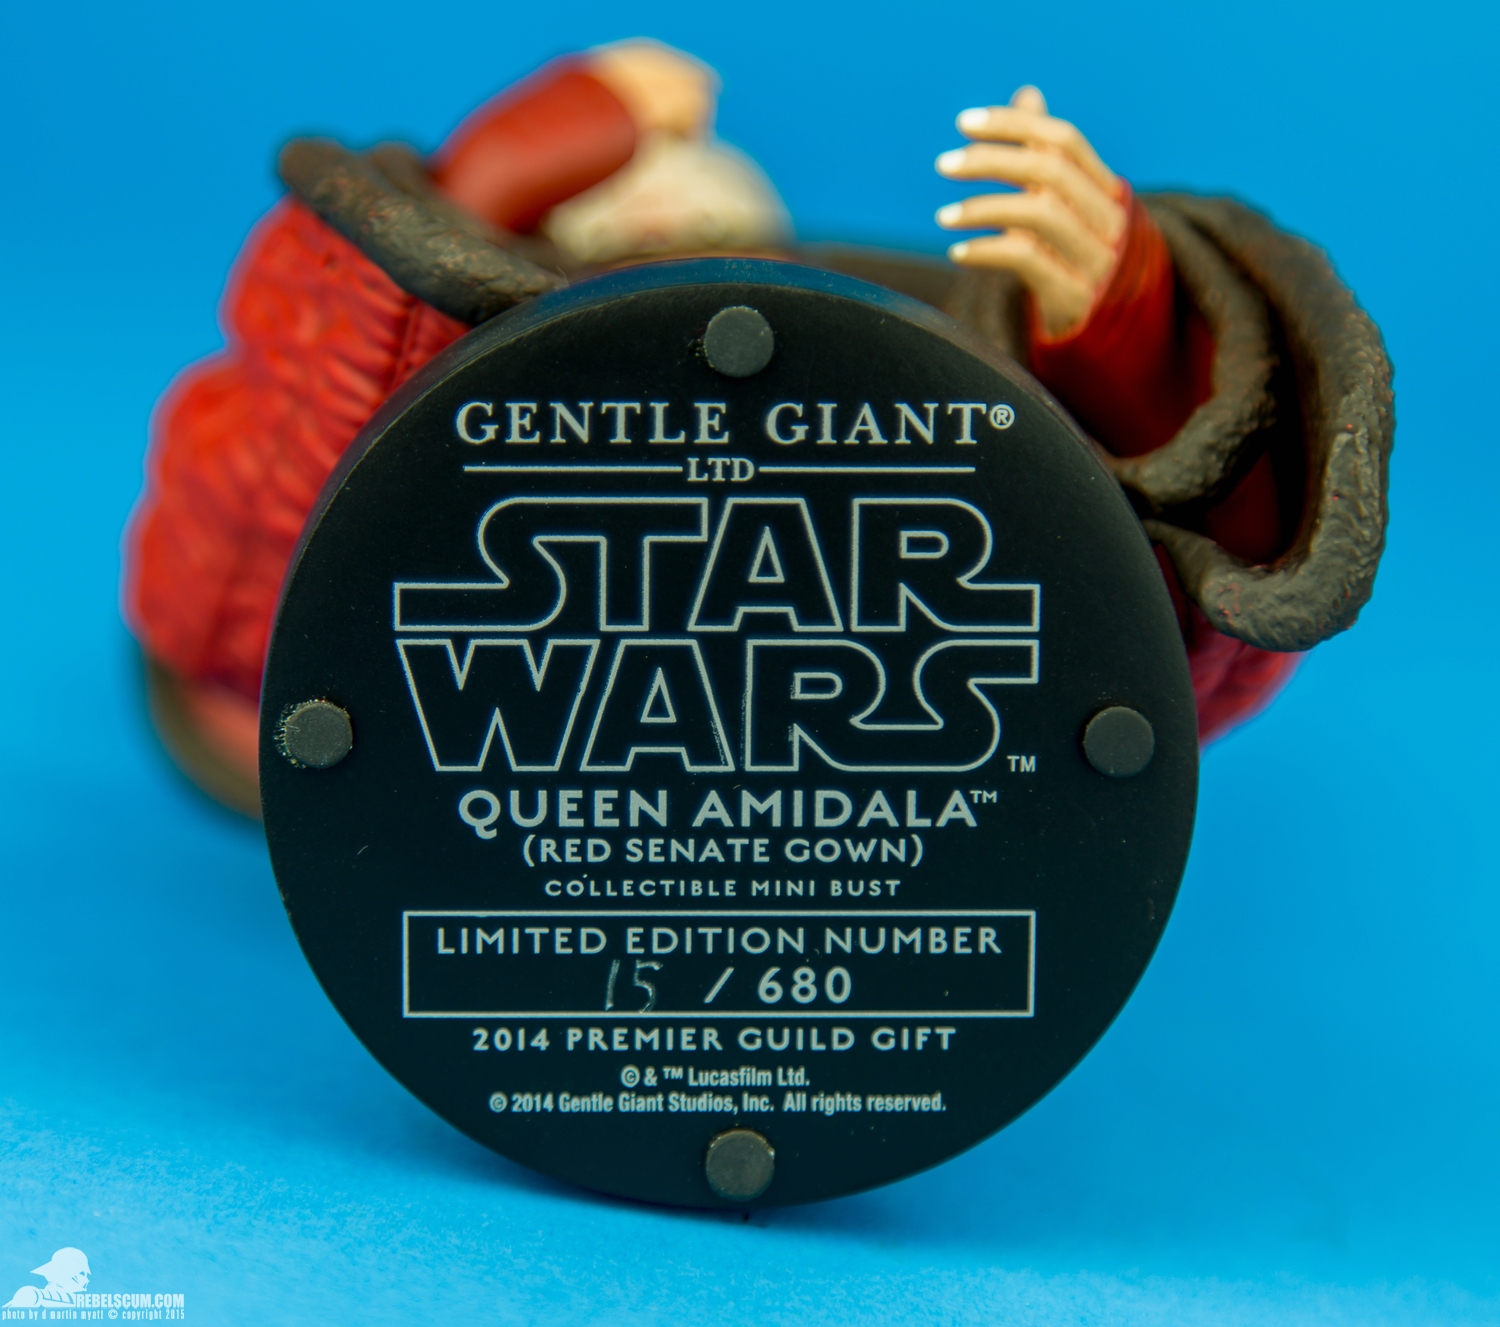 Queen-Amidala-Red-Senate-Gown-Mini-Bust-Gentle-Giant-009.jpg